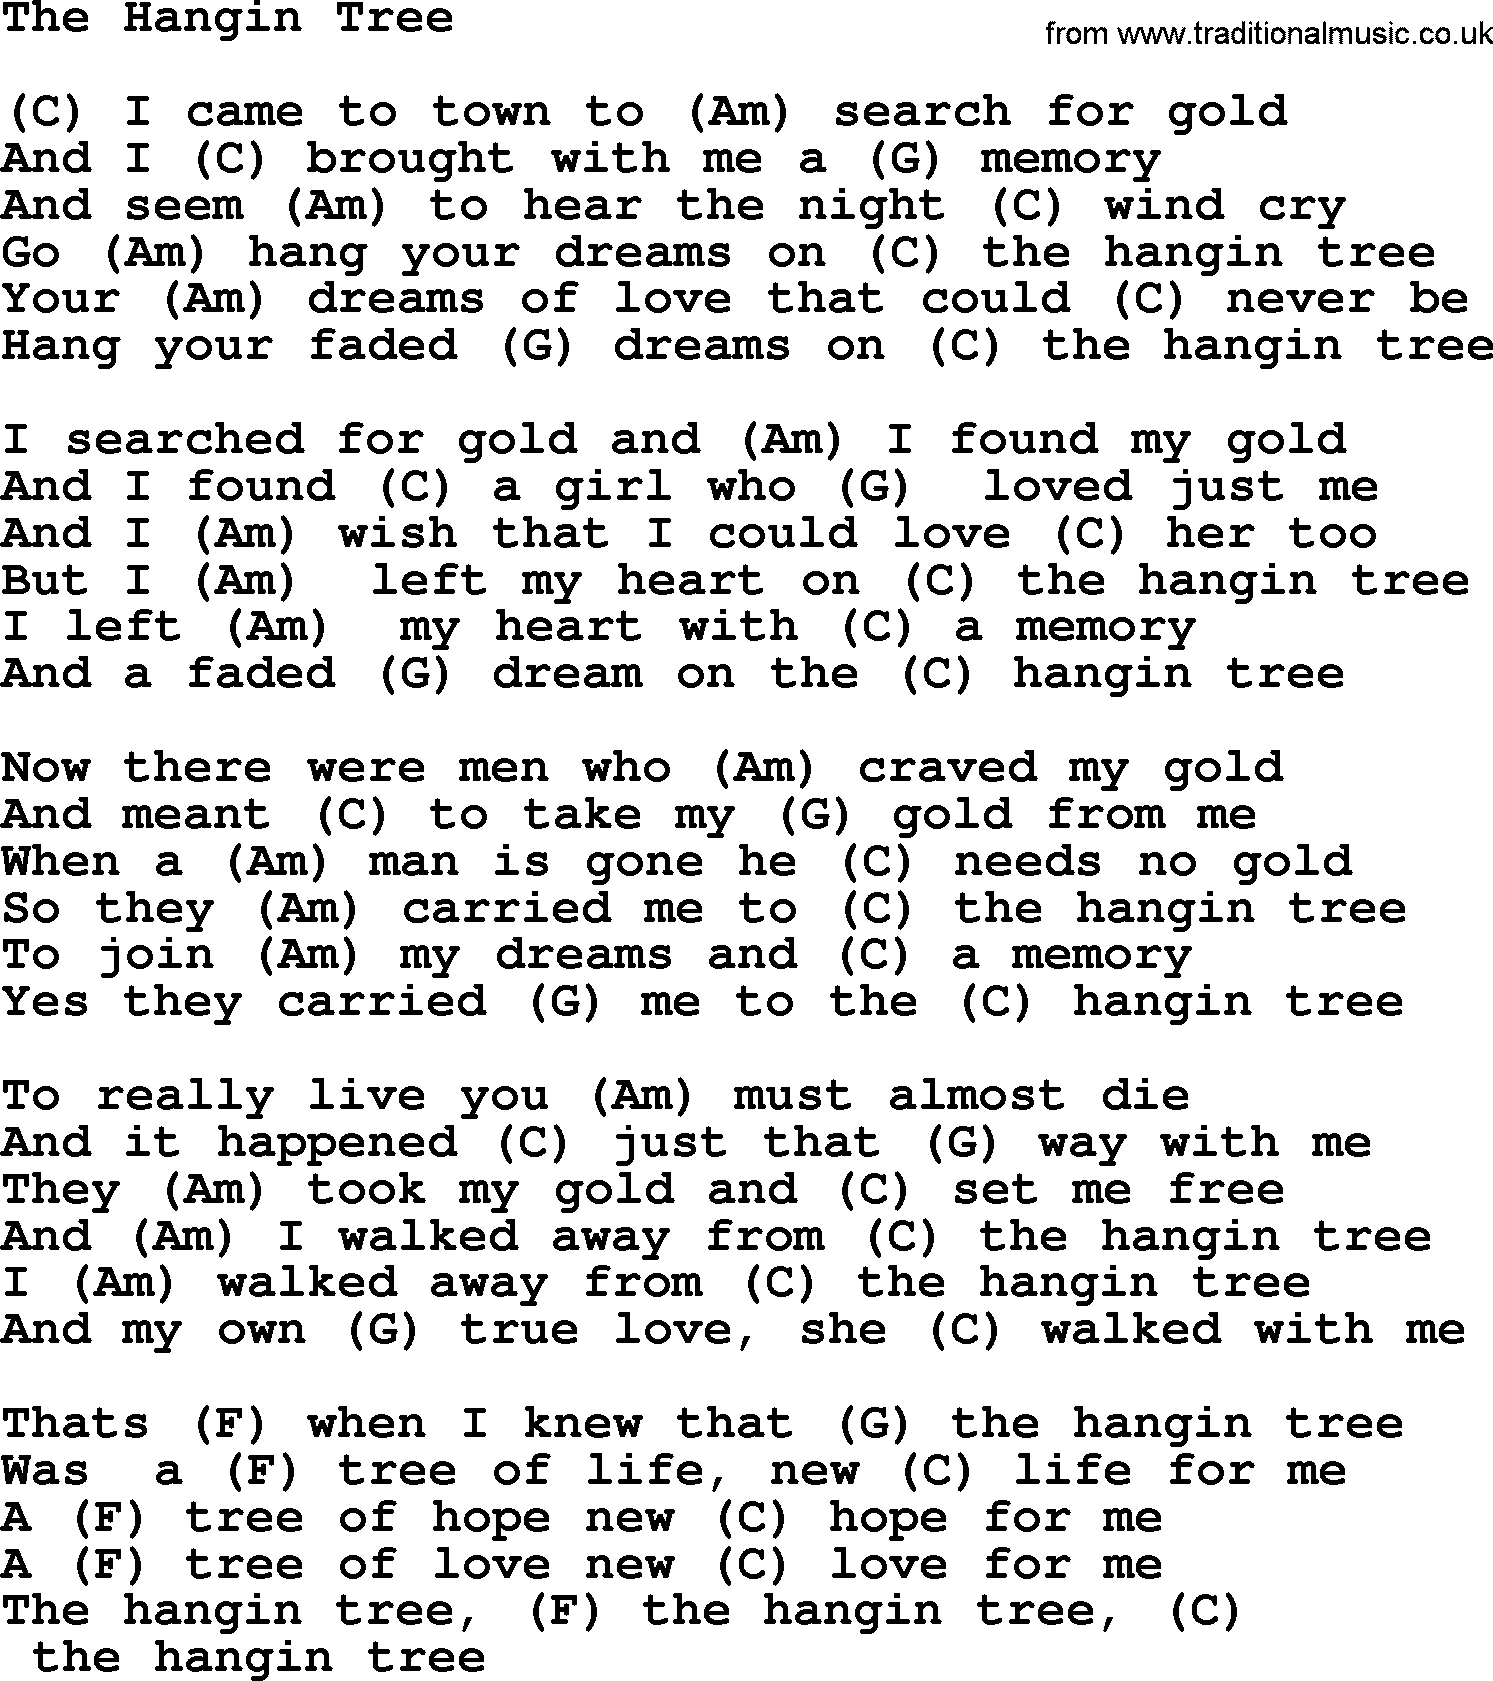 Marty Robbins song: The Hangin Tree, lyrics and chords